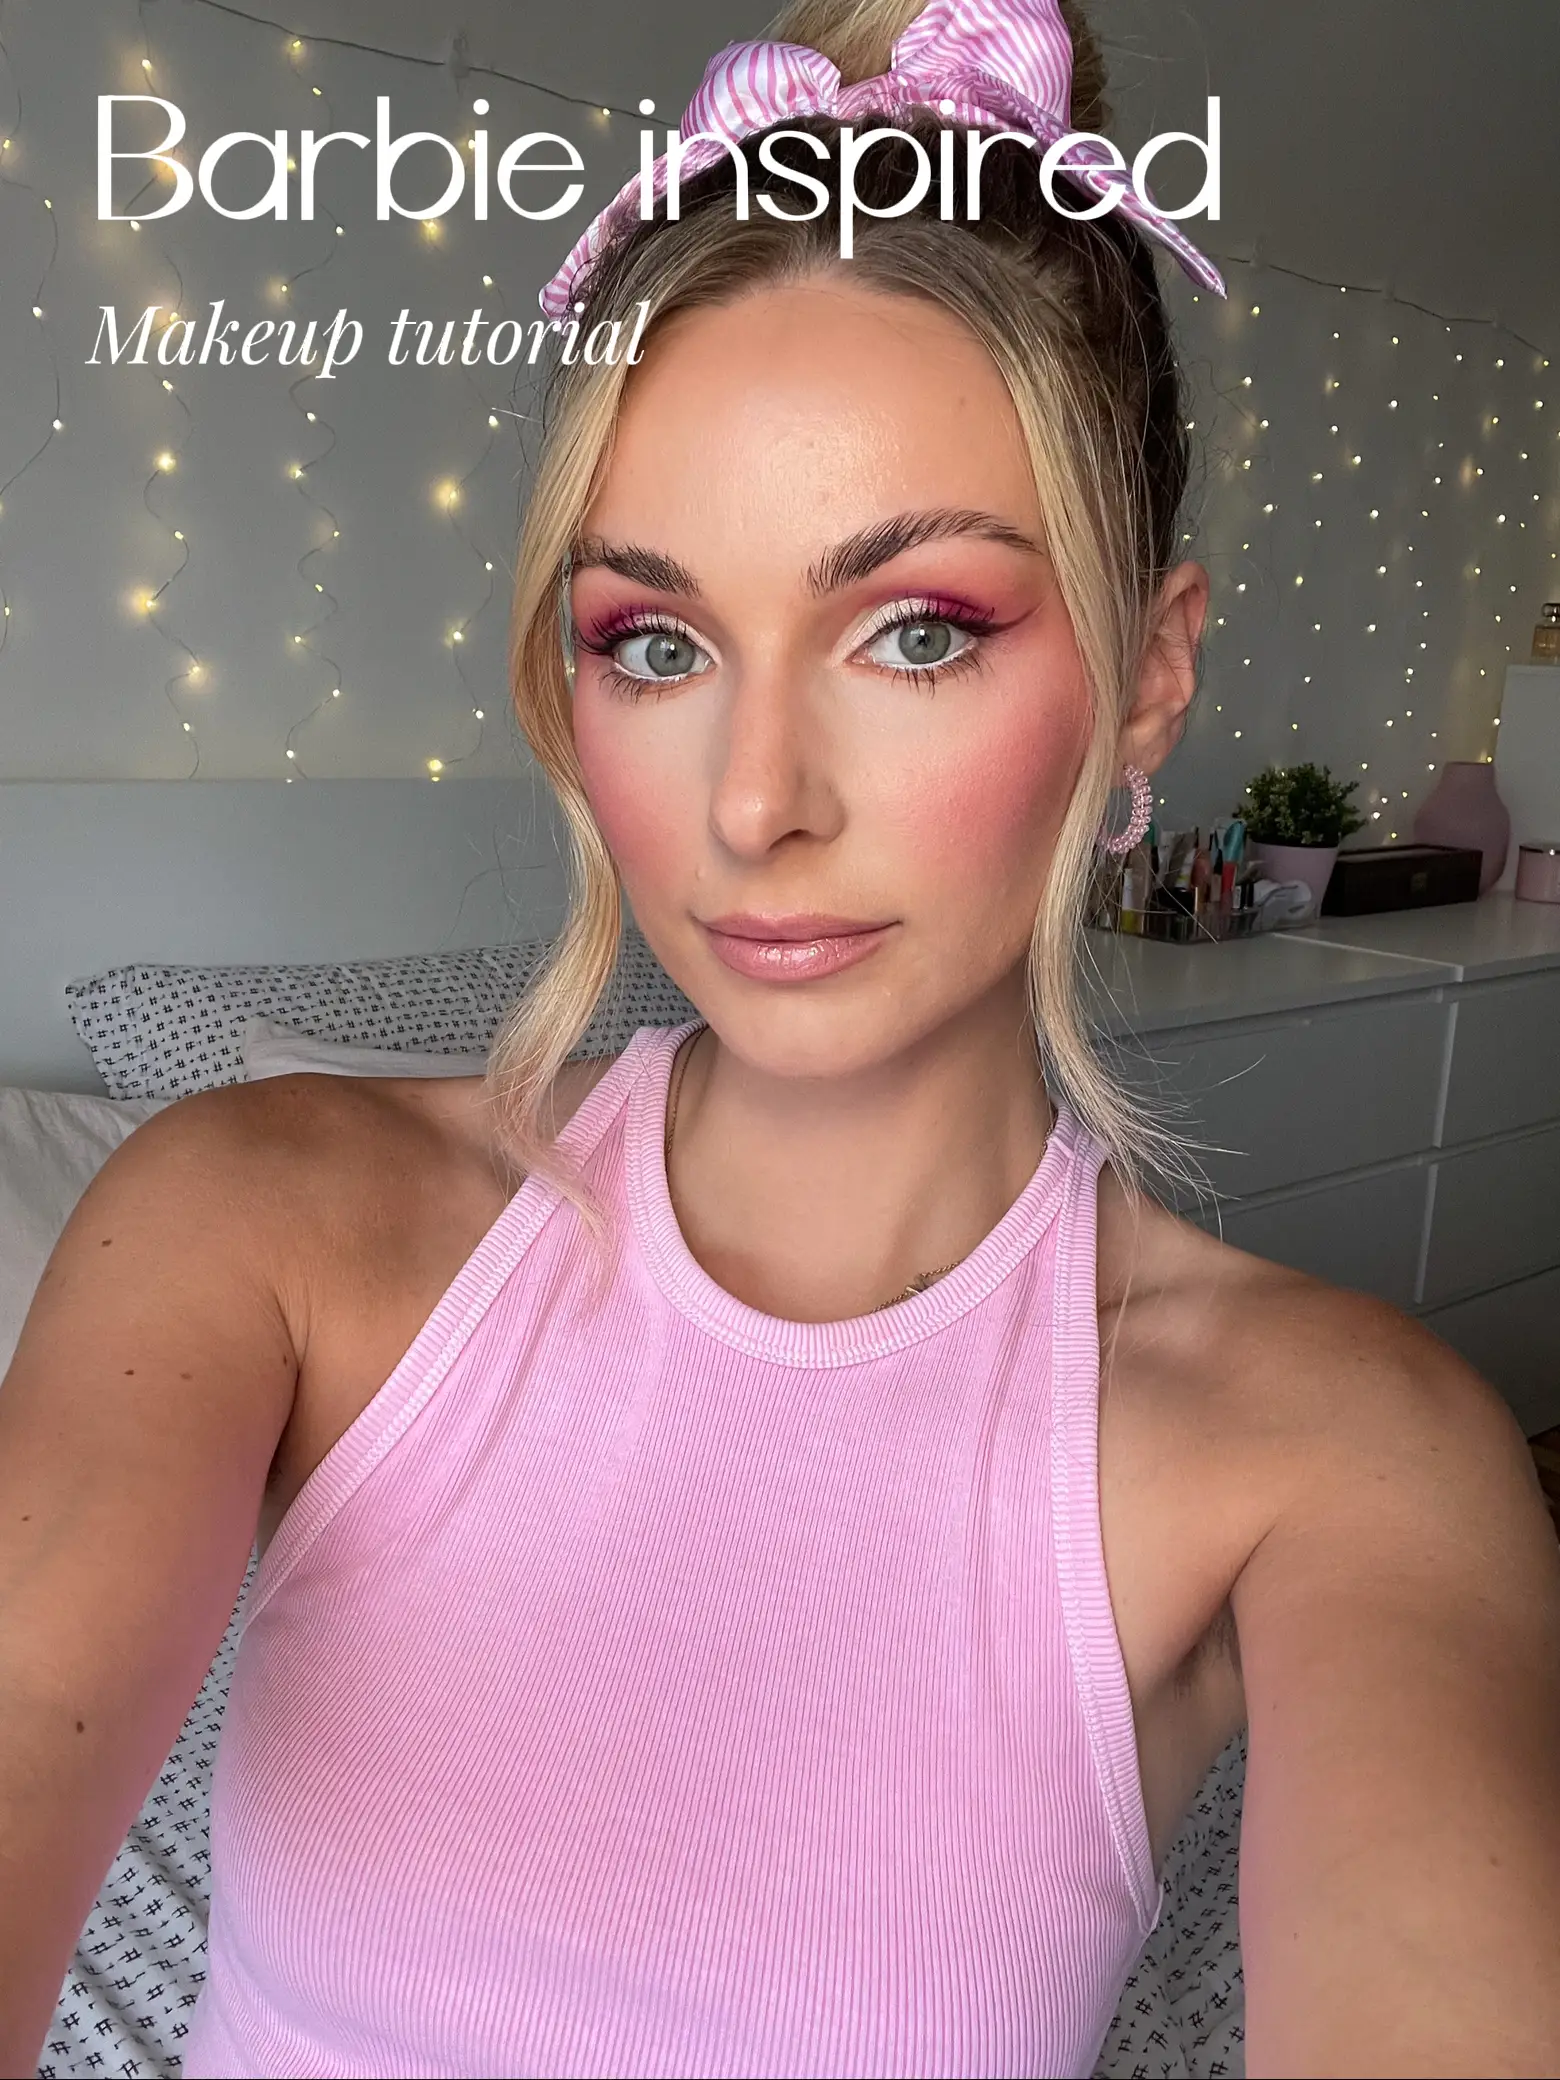 Barbie inspired makeup tutorial - Lemon8 Search